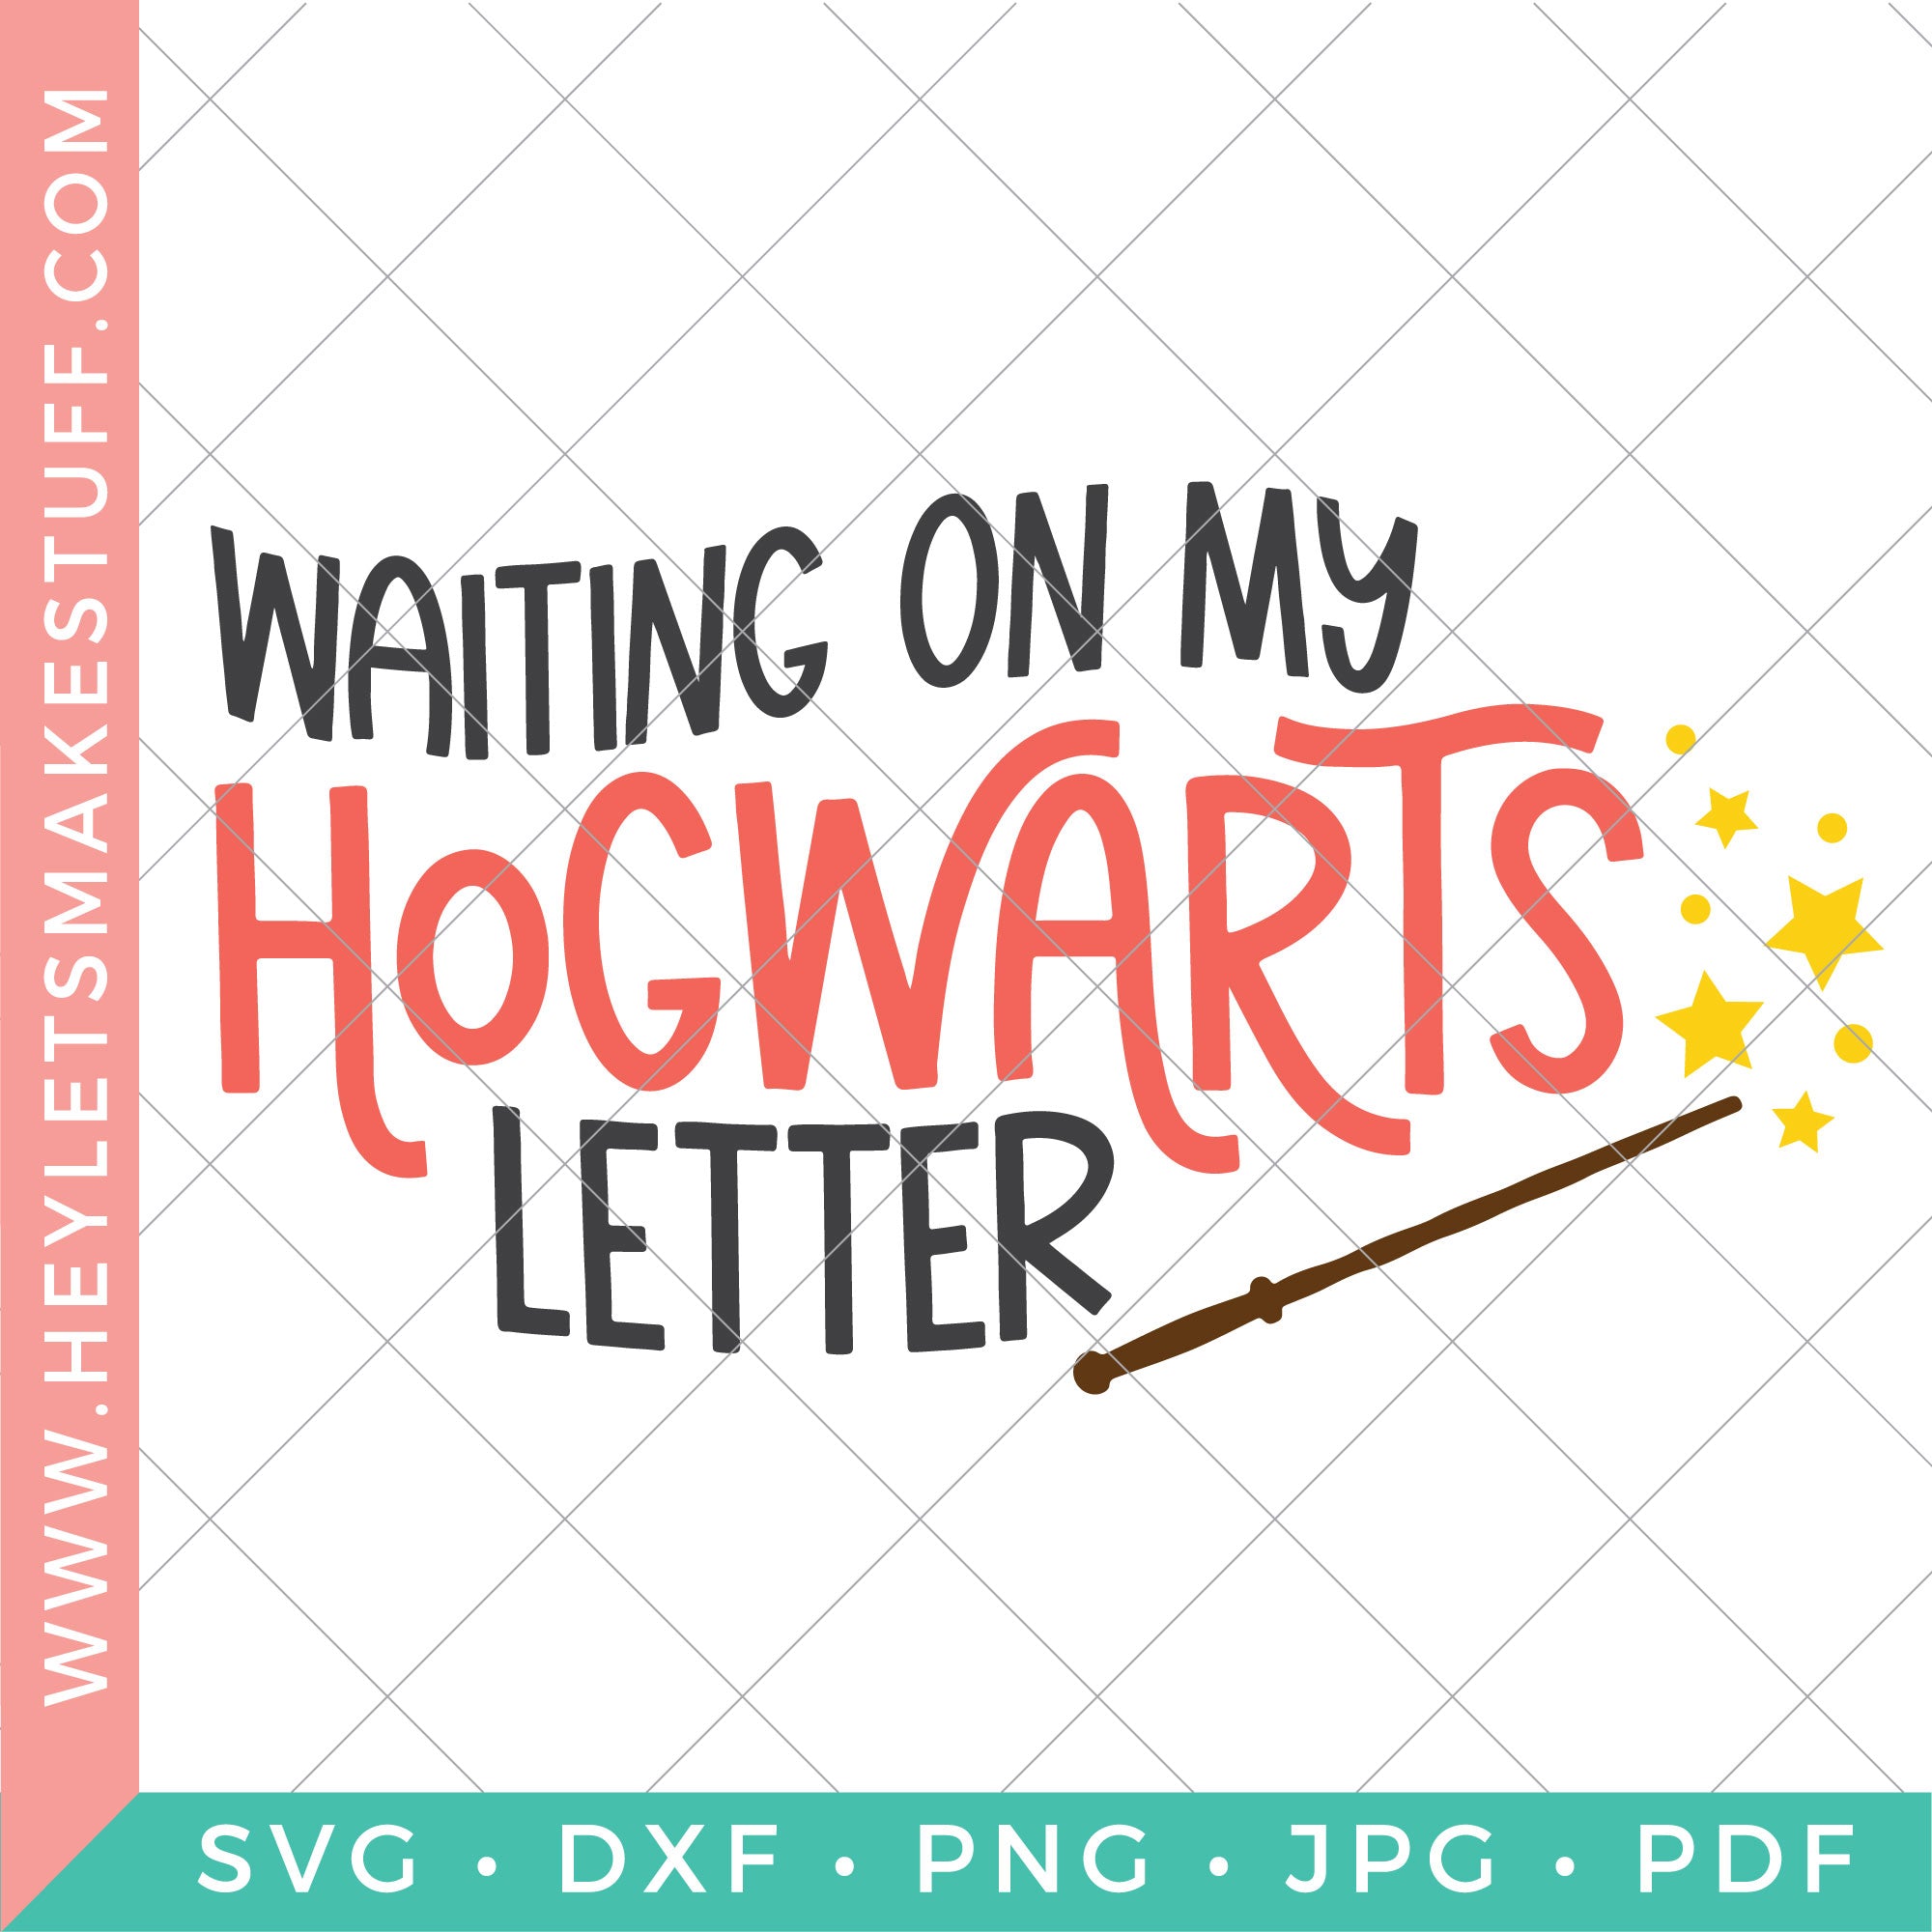 Download Waiting On My Hogwarts Letter Hey Let S Make Stuff